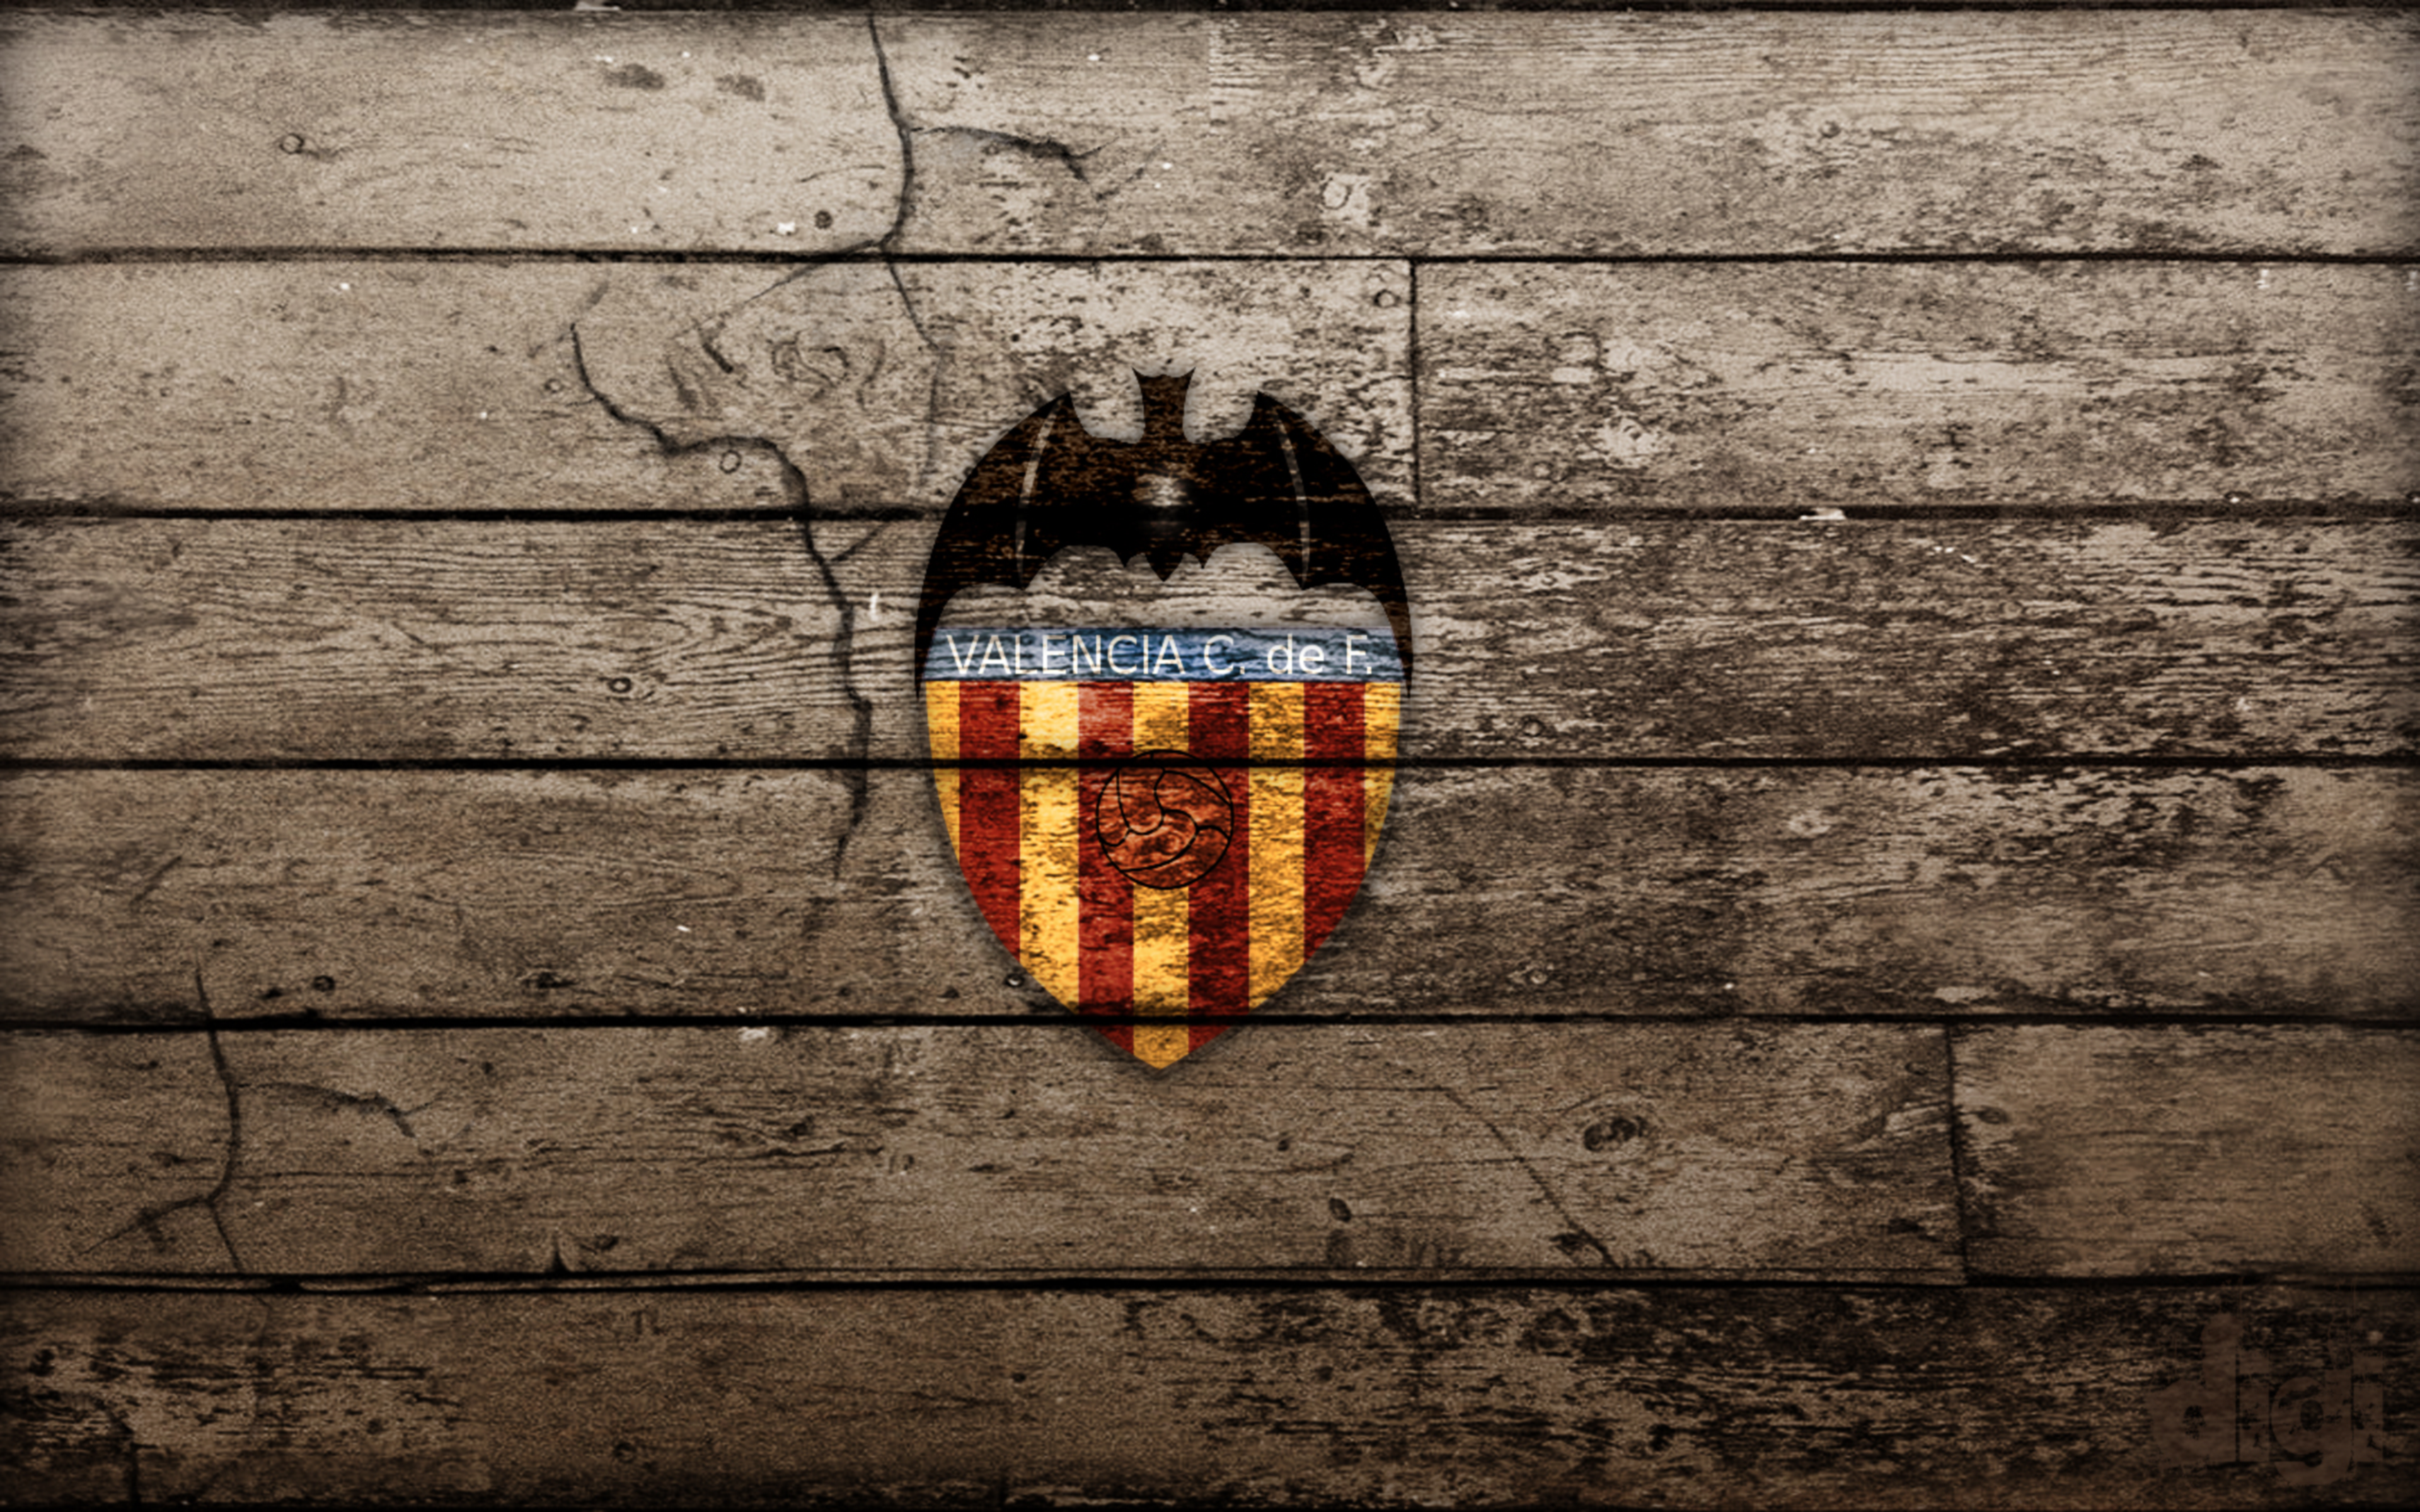 Emblem Logo Soccer Valencia Cf 3840x2400